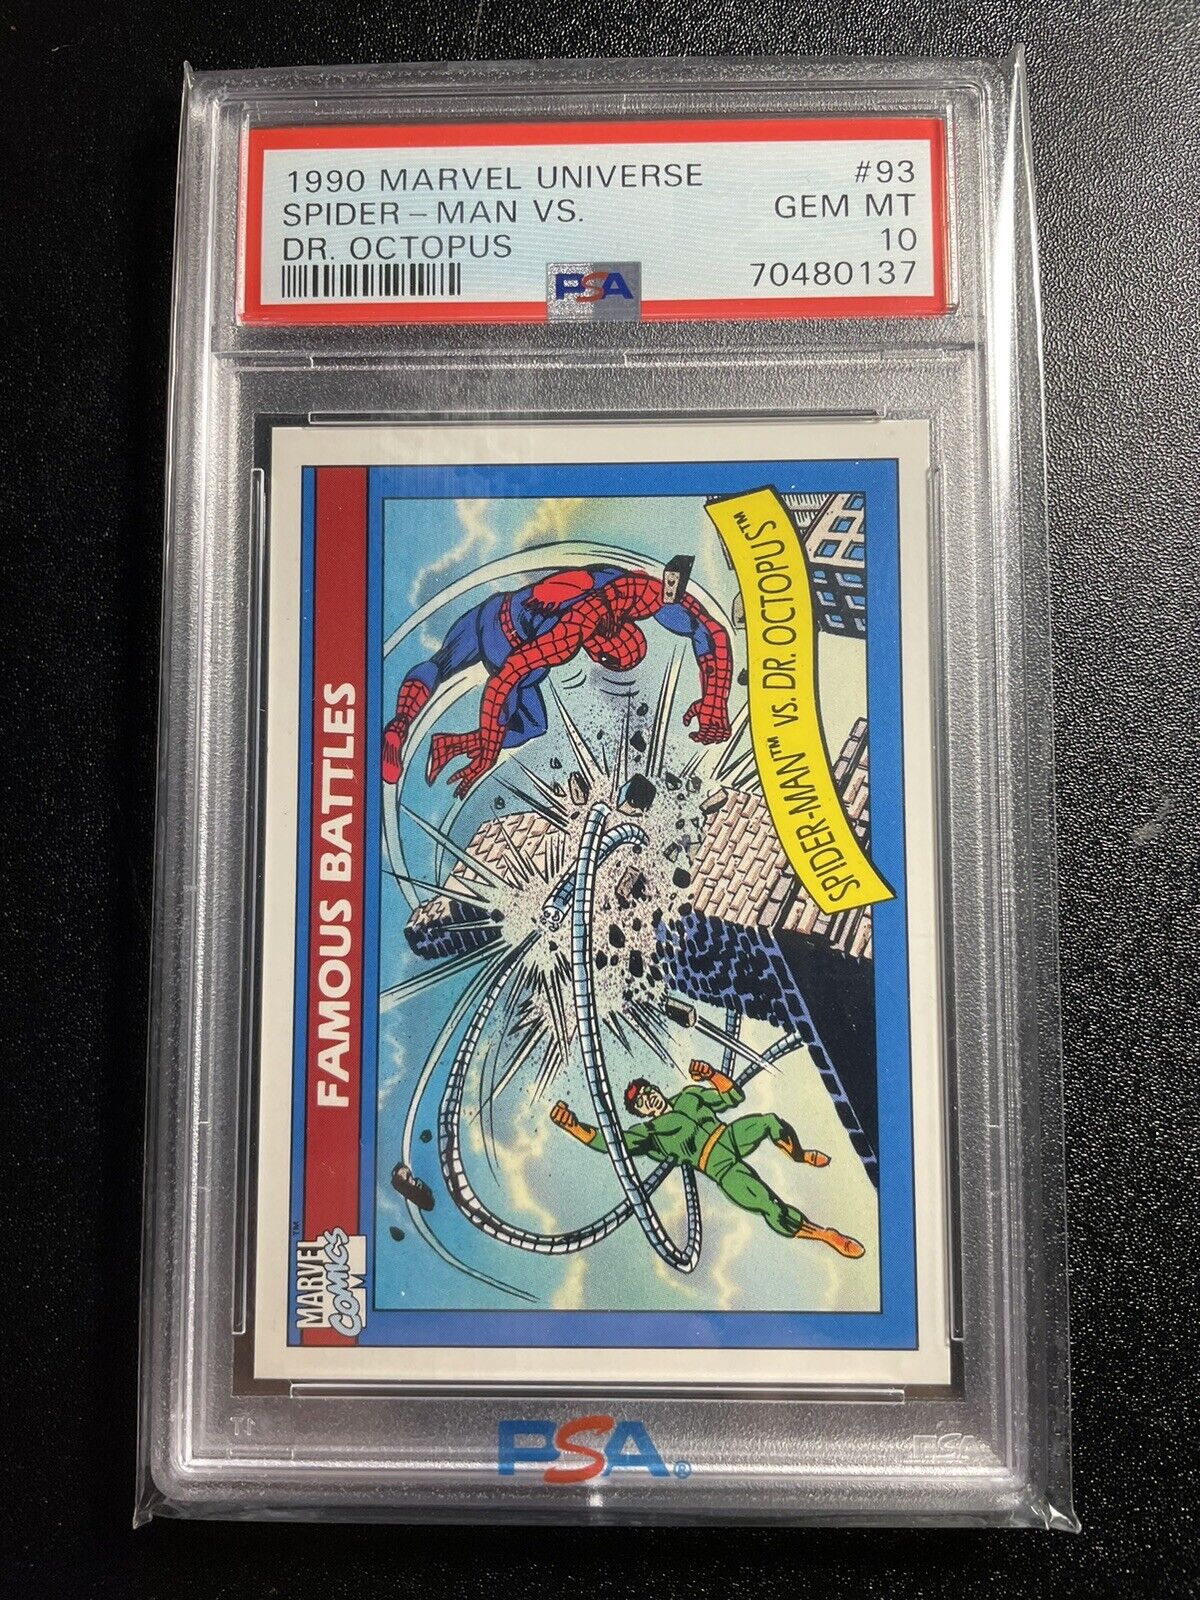 1990 Marvel Universe Spider-Man vs. Dr. Octopus #93 PSA 10 GEM MINT